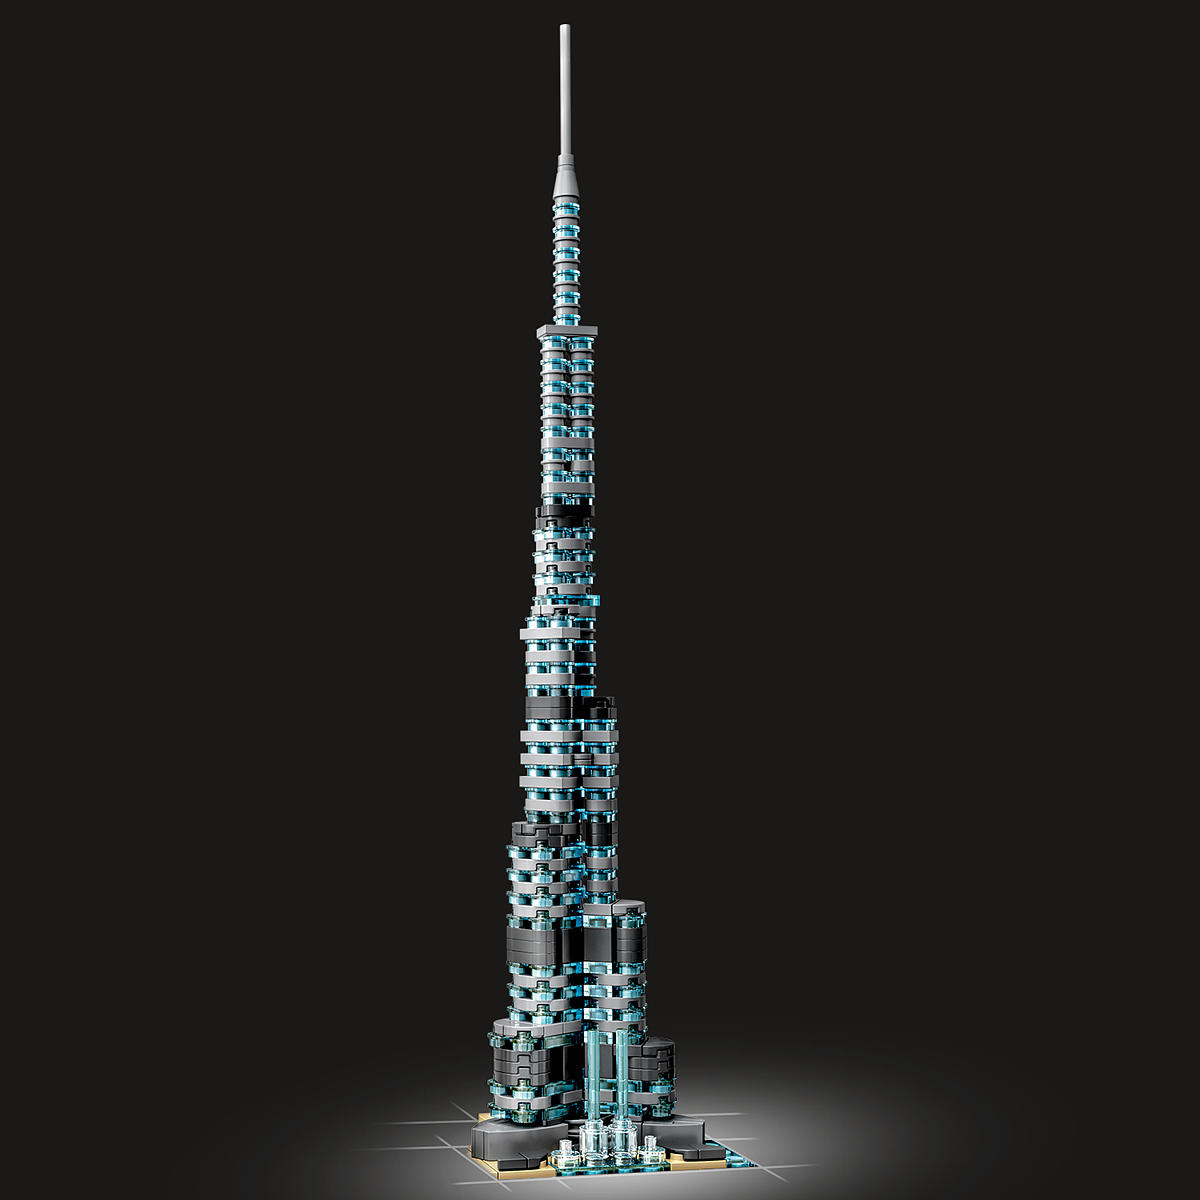 The awesome Burj Khalifa